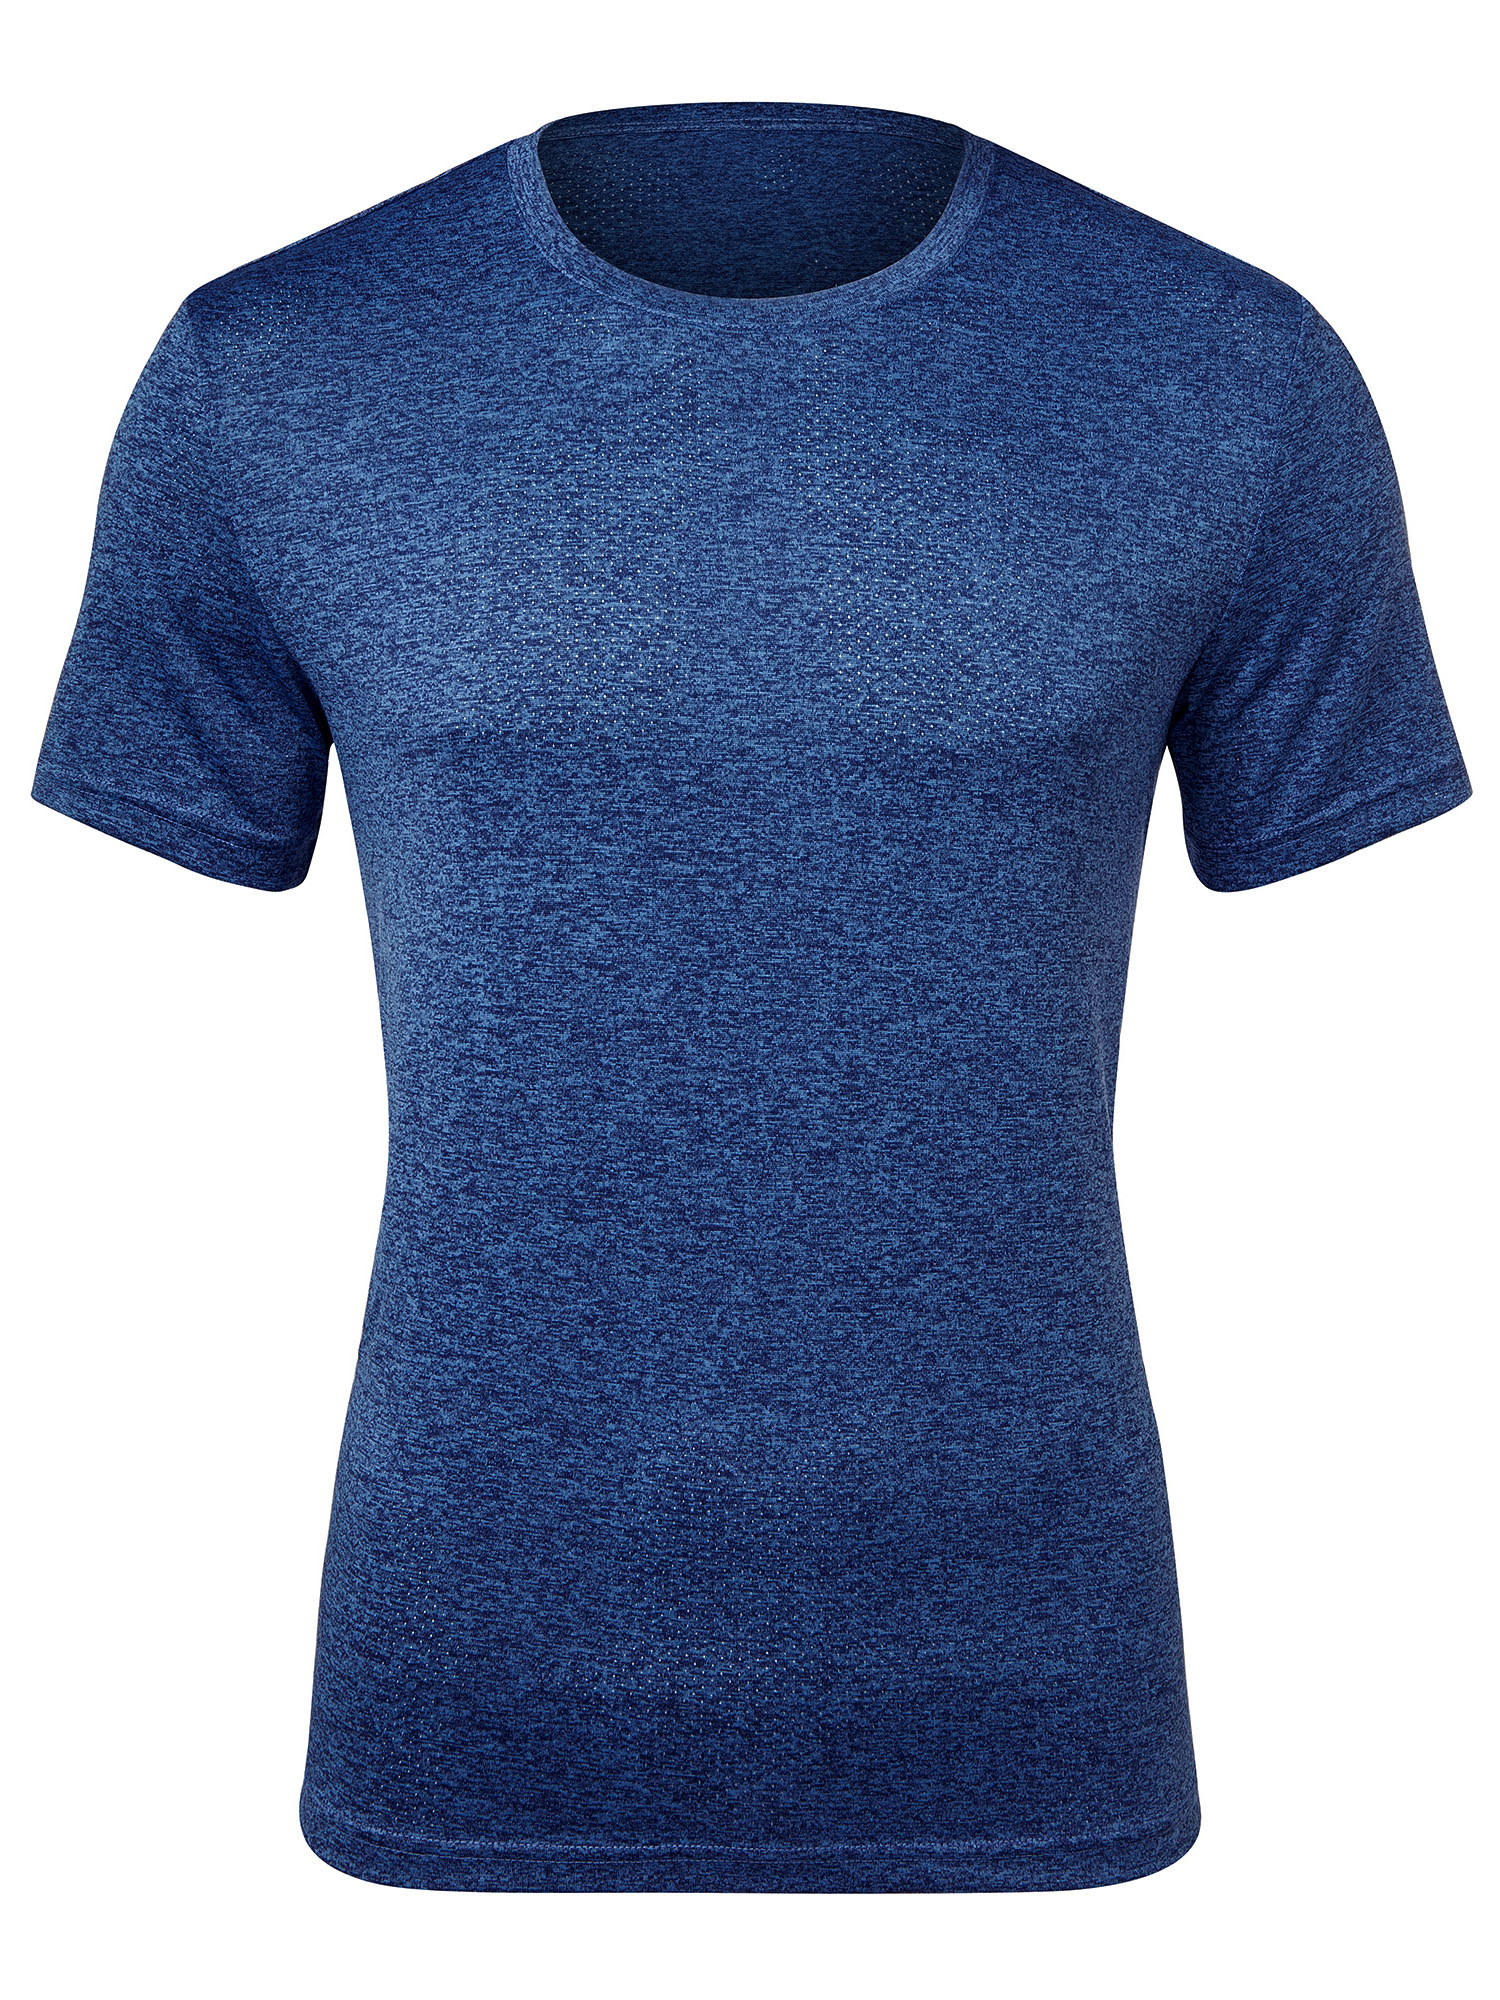 LELINTA Men's Short Sleeve Rashguard Mens Rashguard UPF 50+ Swimwear Swim Shirt Blue, 2XL - image 1 of 8